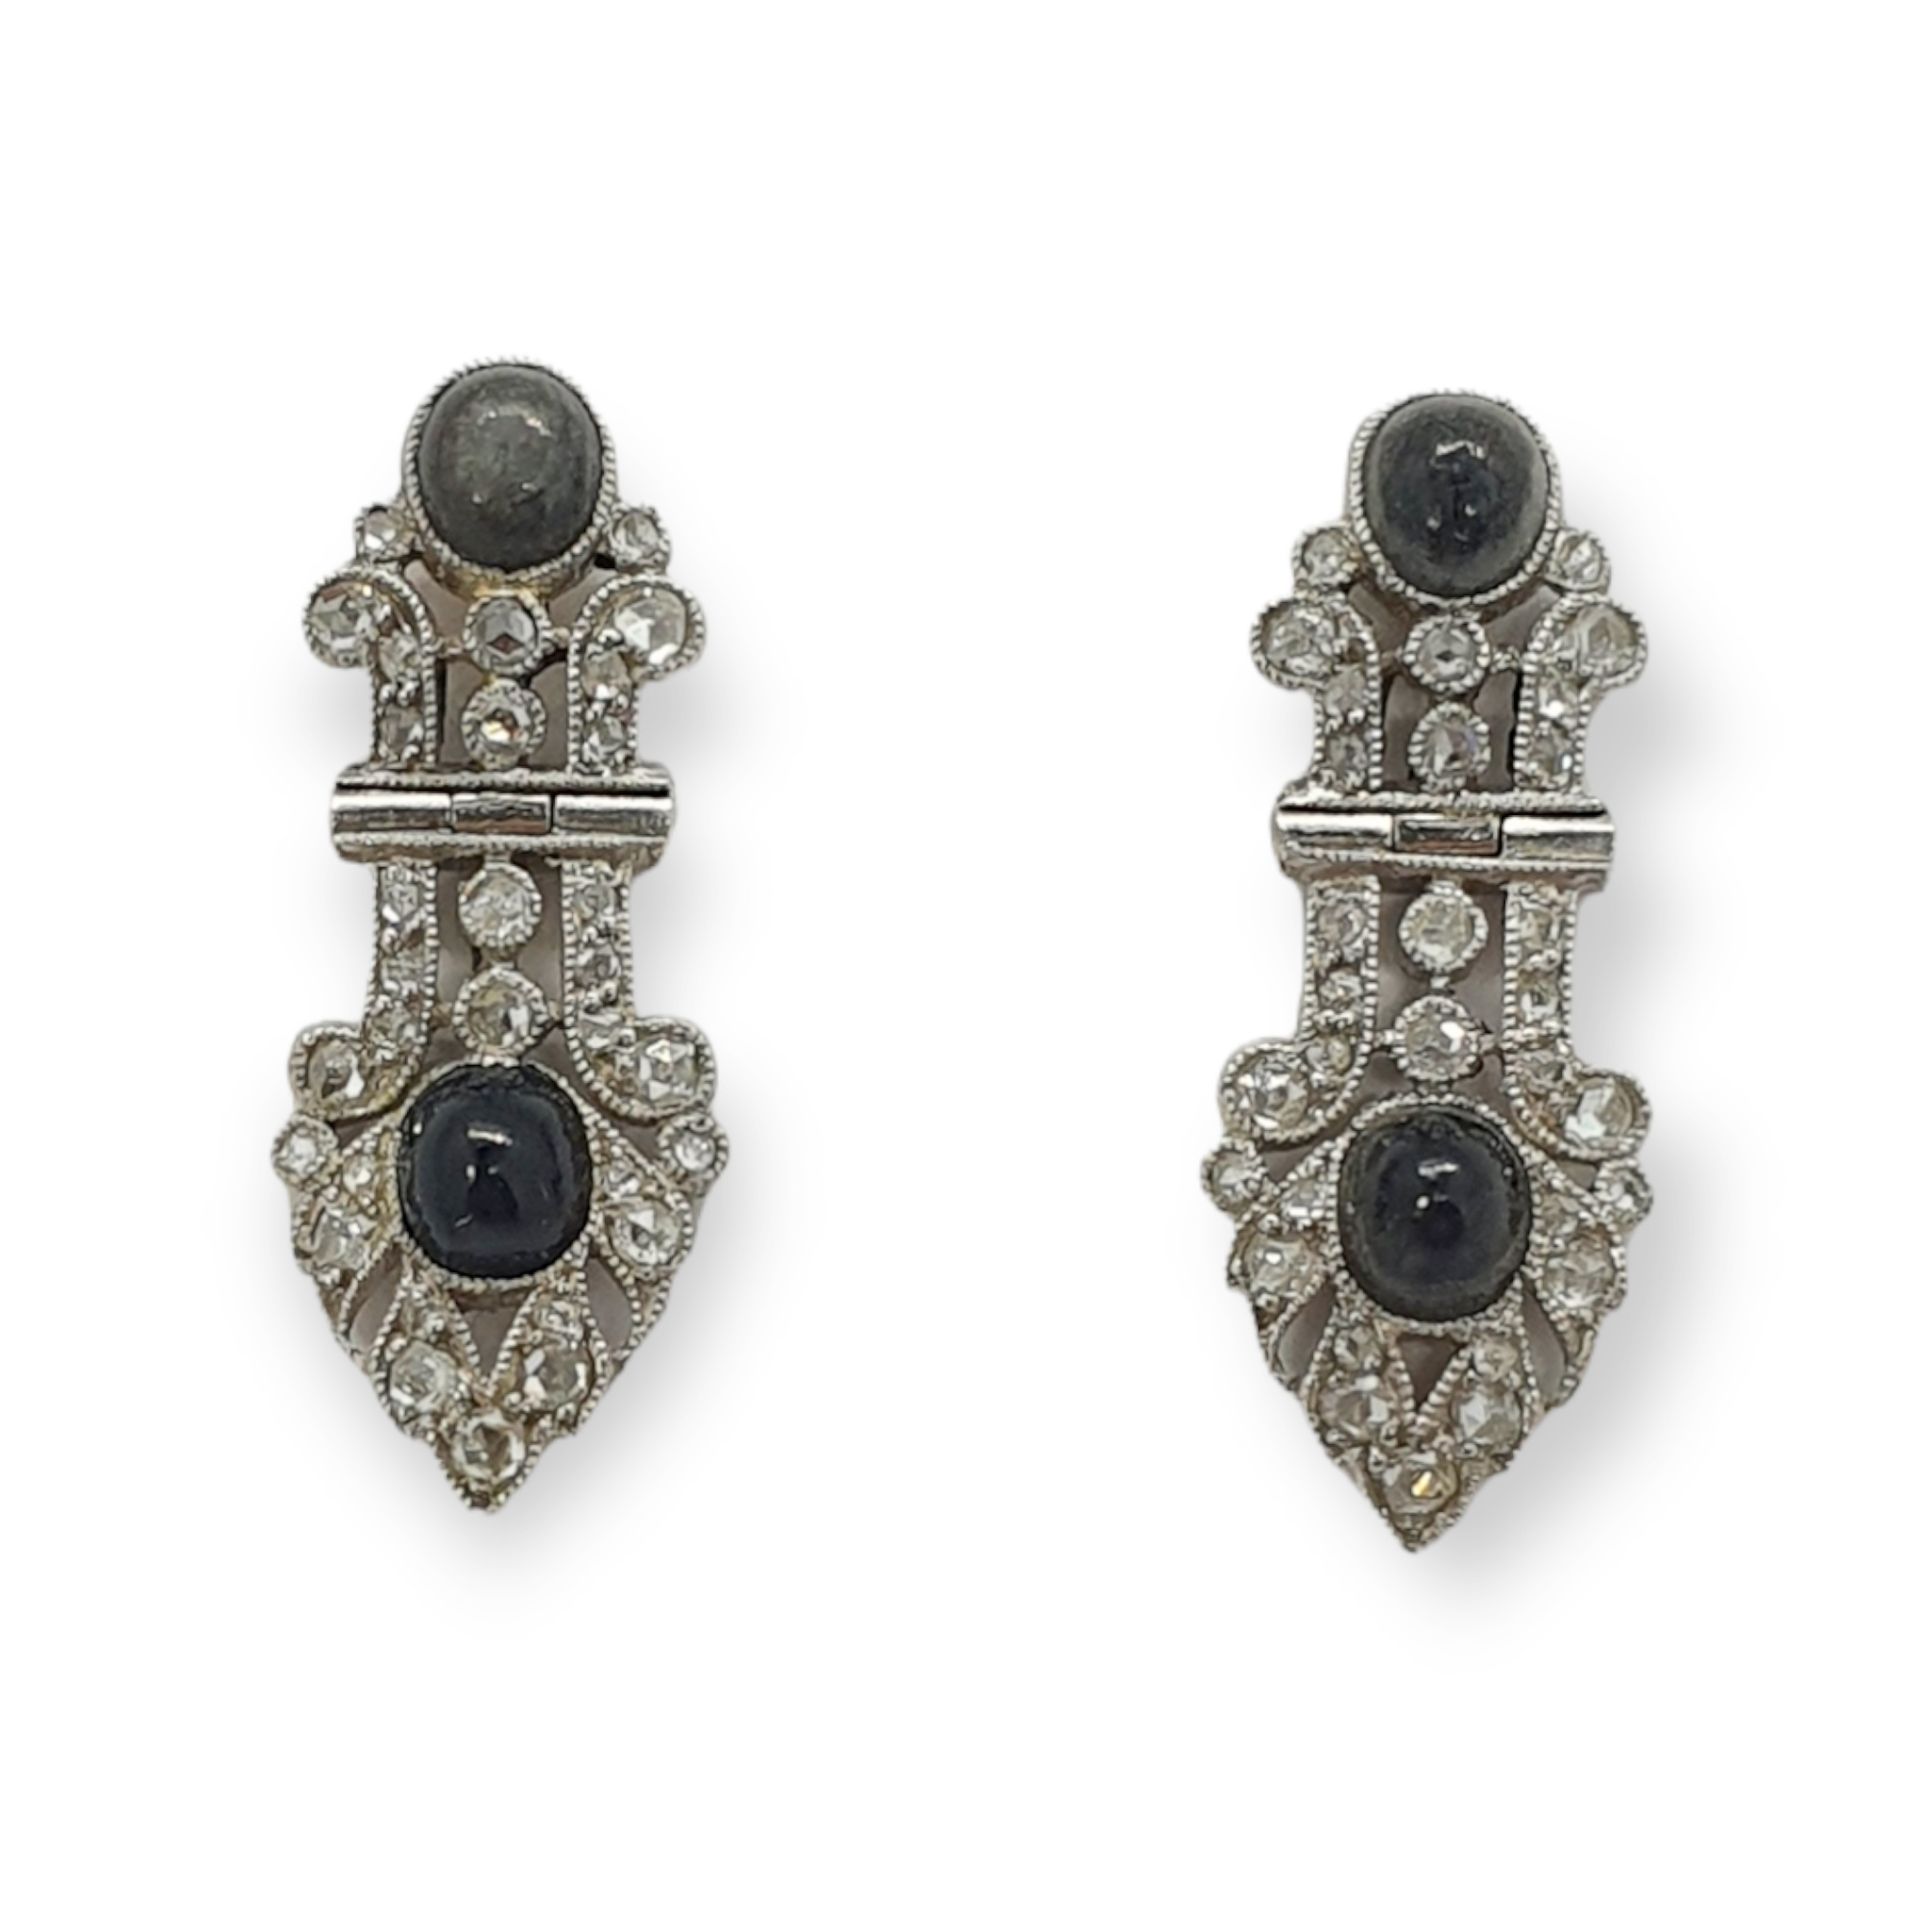 Pendientes Art Déco 铂金装饰笔和18K黄金项链，含红宝石和钻石，共约0.5克拉。1930-35年。

重量2,68克